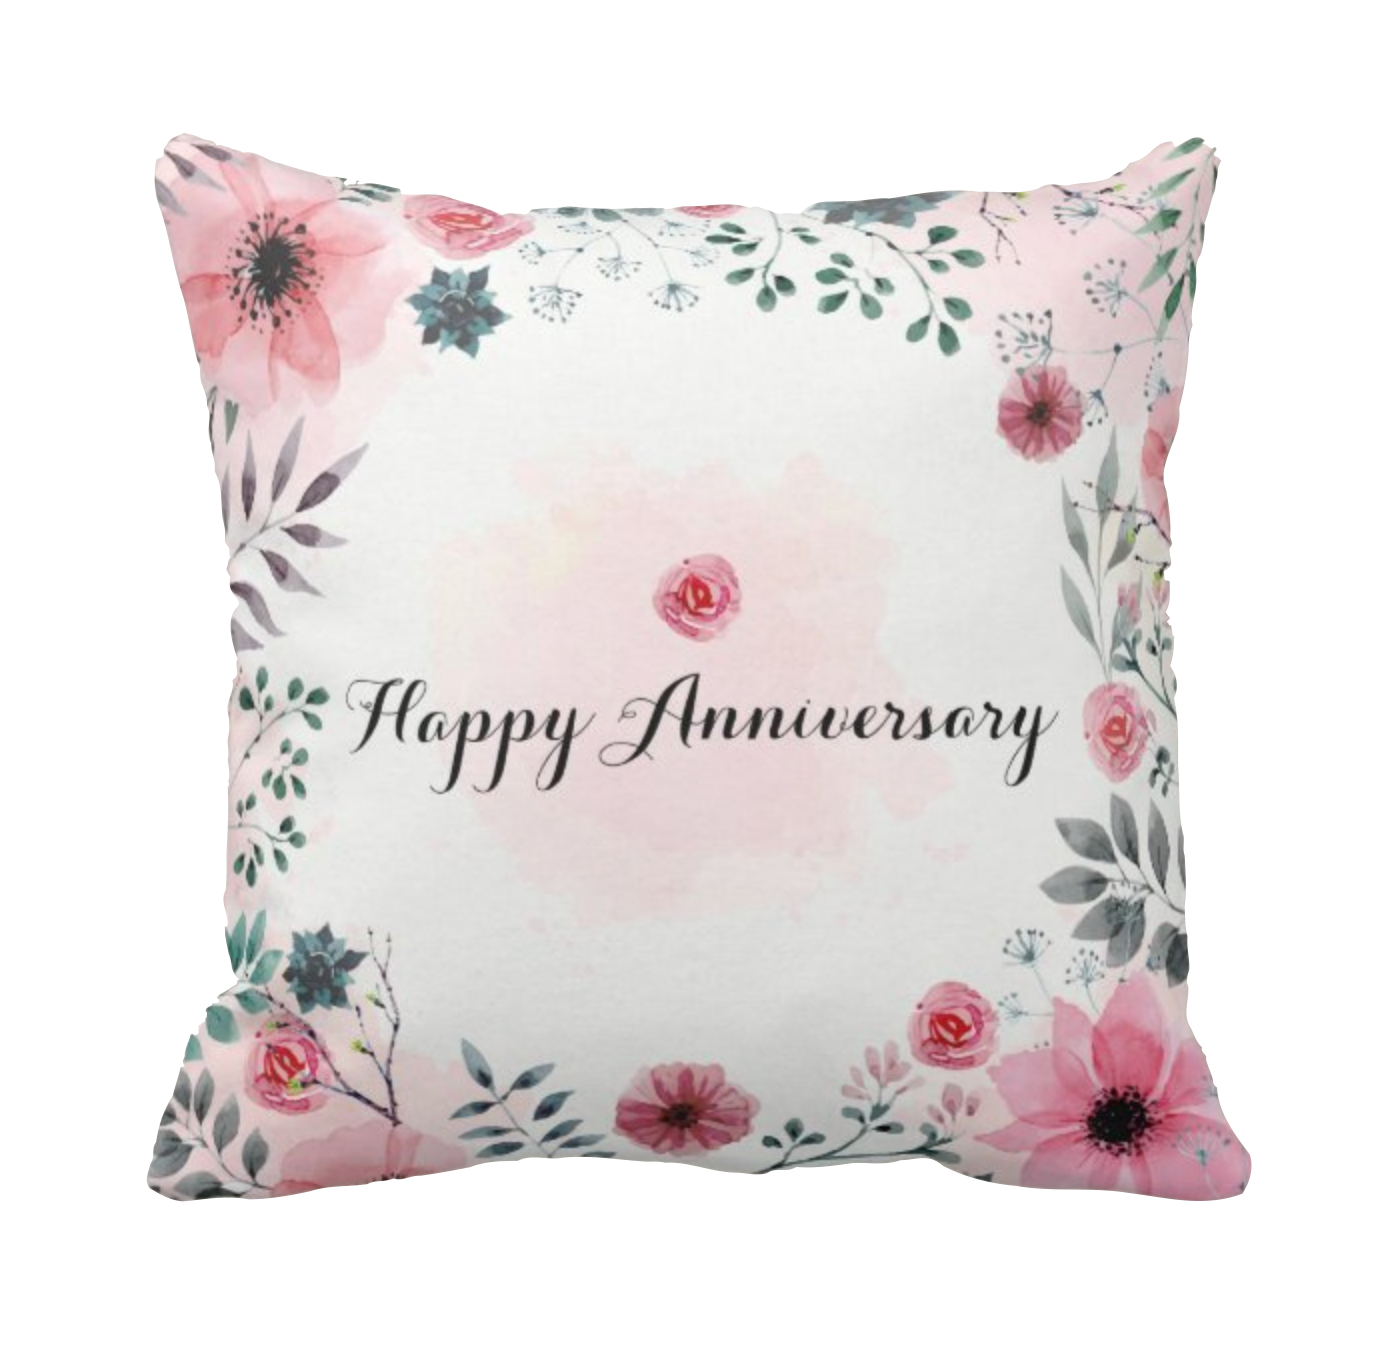 Pink Flower名字客製抱枕 Name Personlized Cushion-Pink Flower Design - HKGIFTFORU